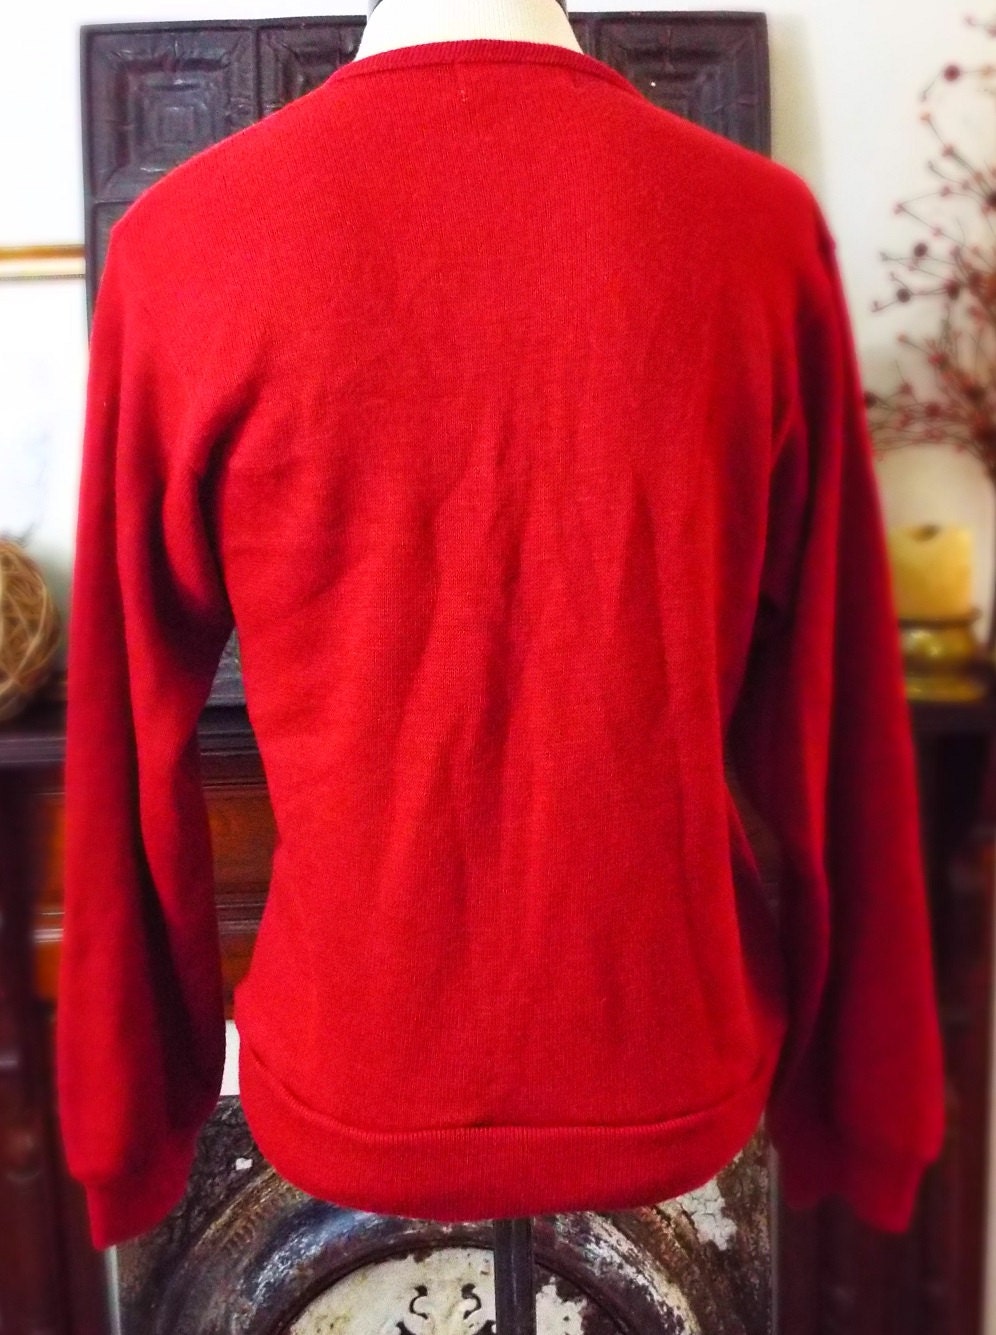 Vintage Red V Neck Newton School District Sweater by Creslan